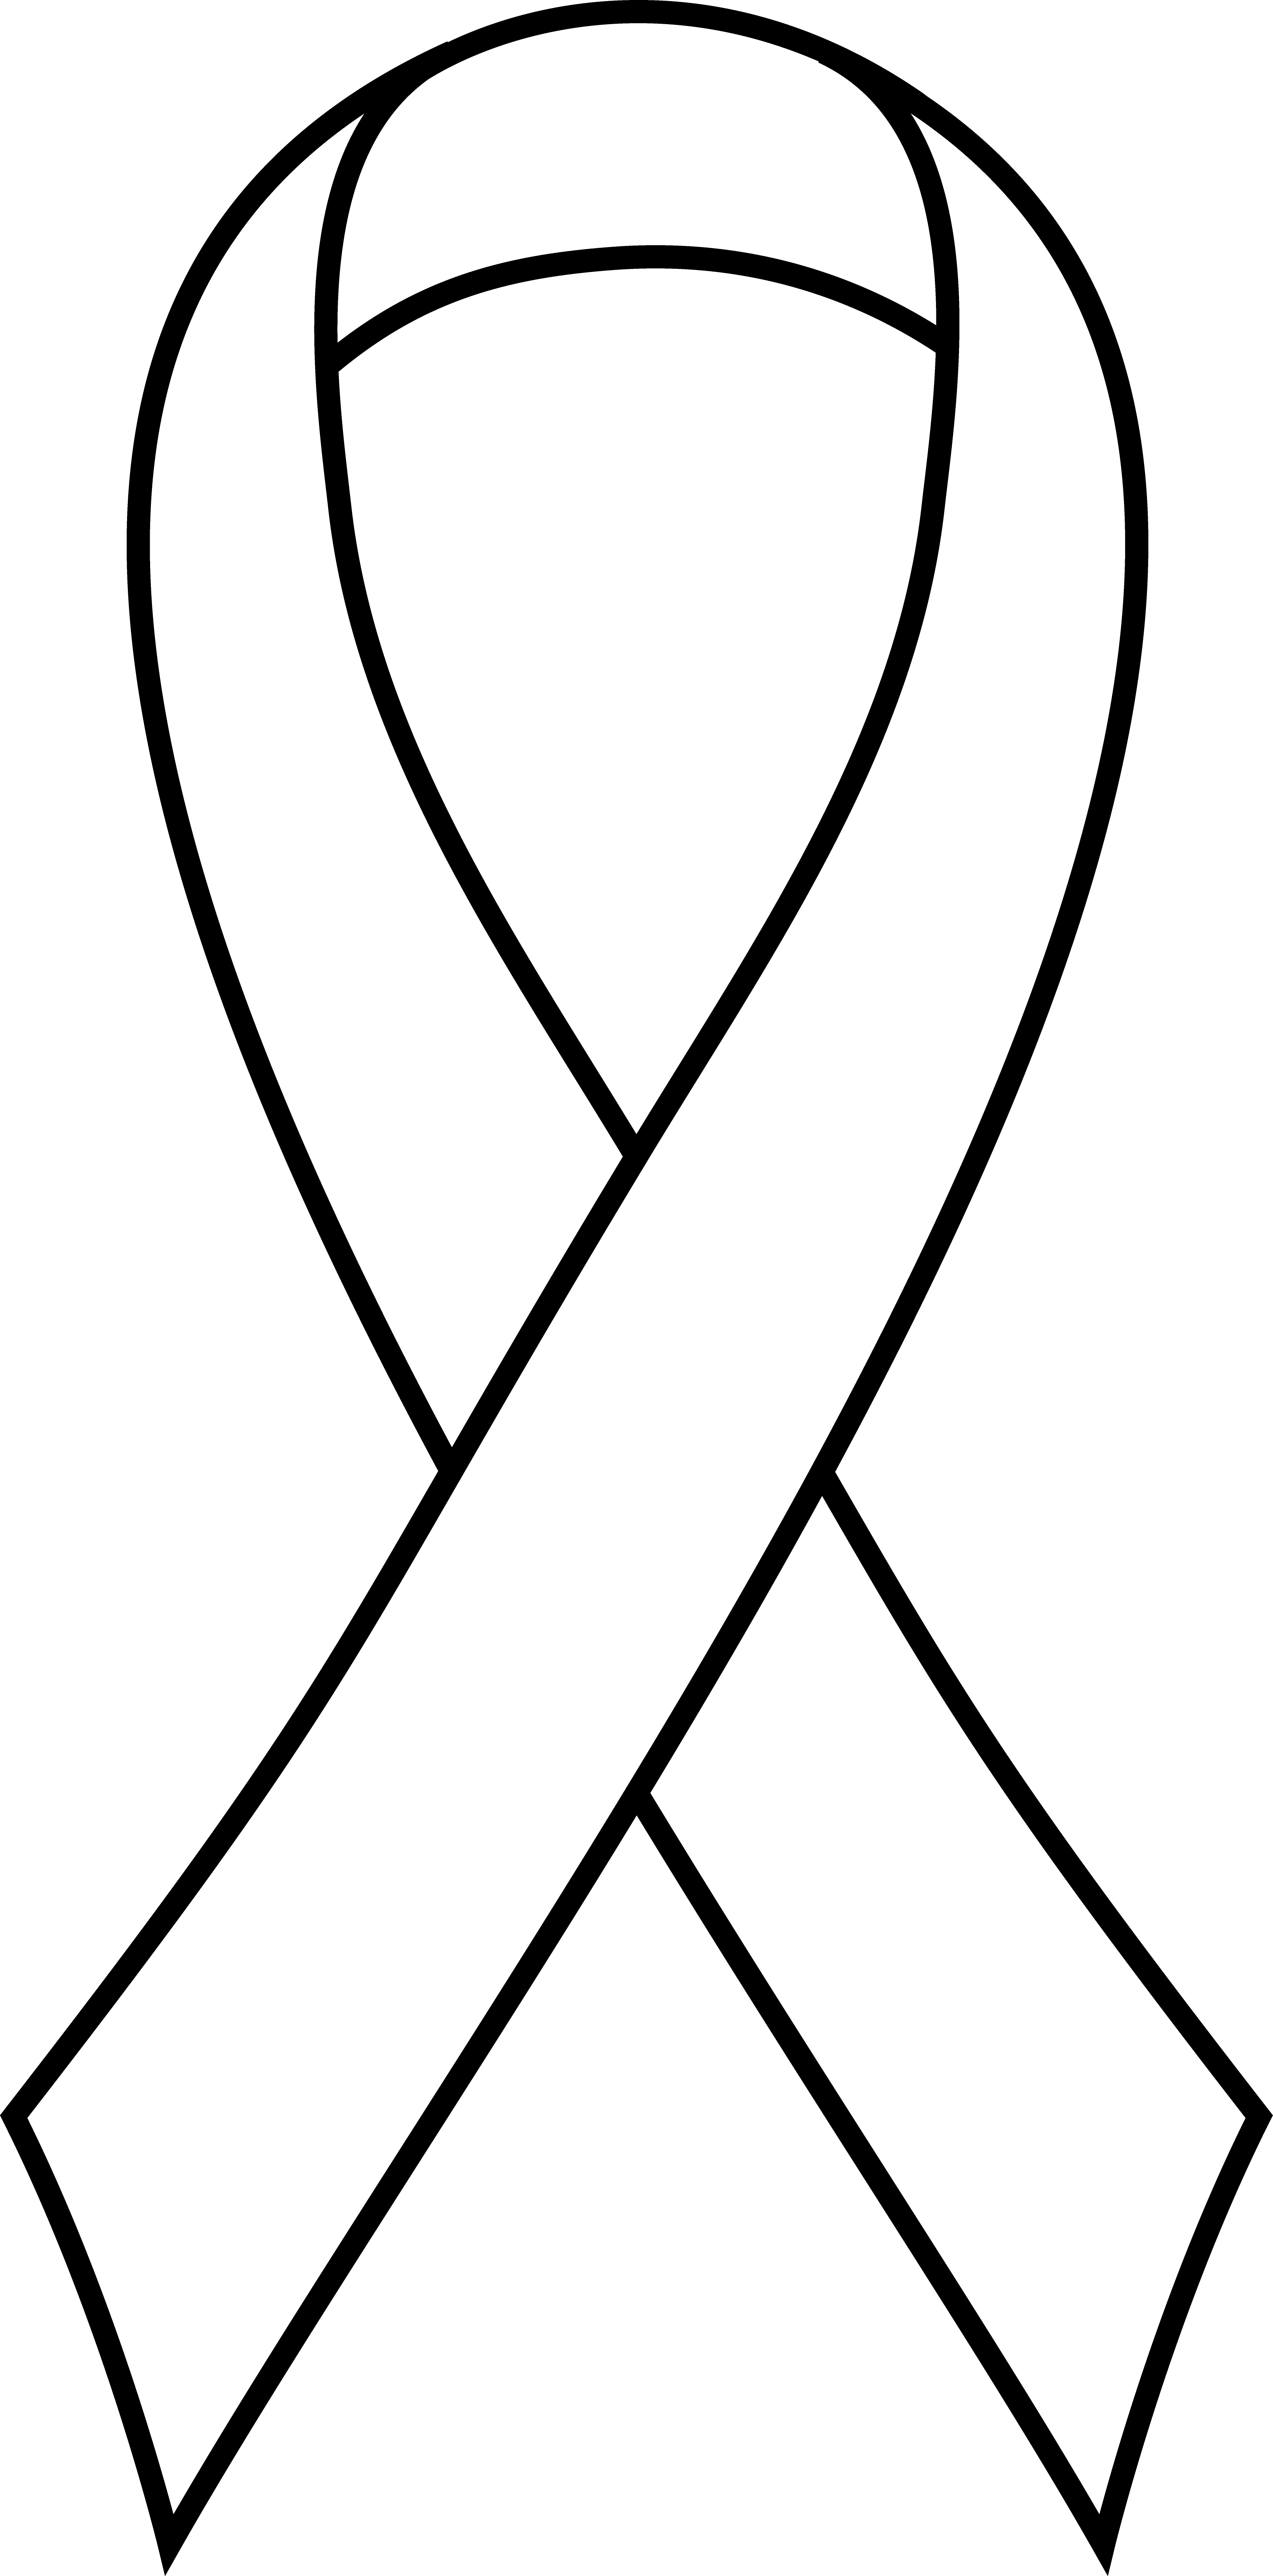 Images For  Cancer Ribbons Outline